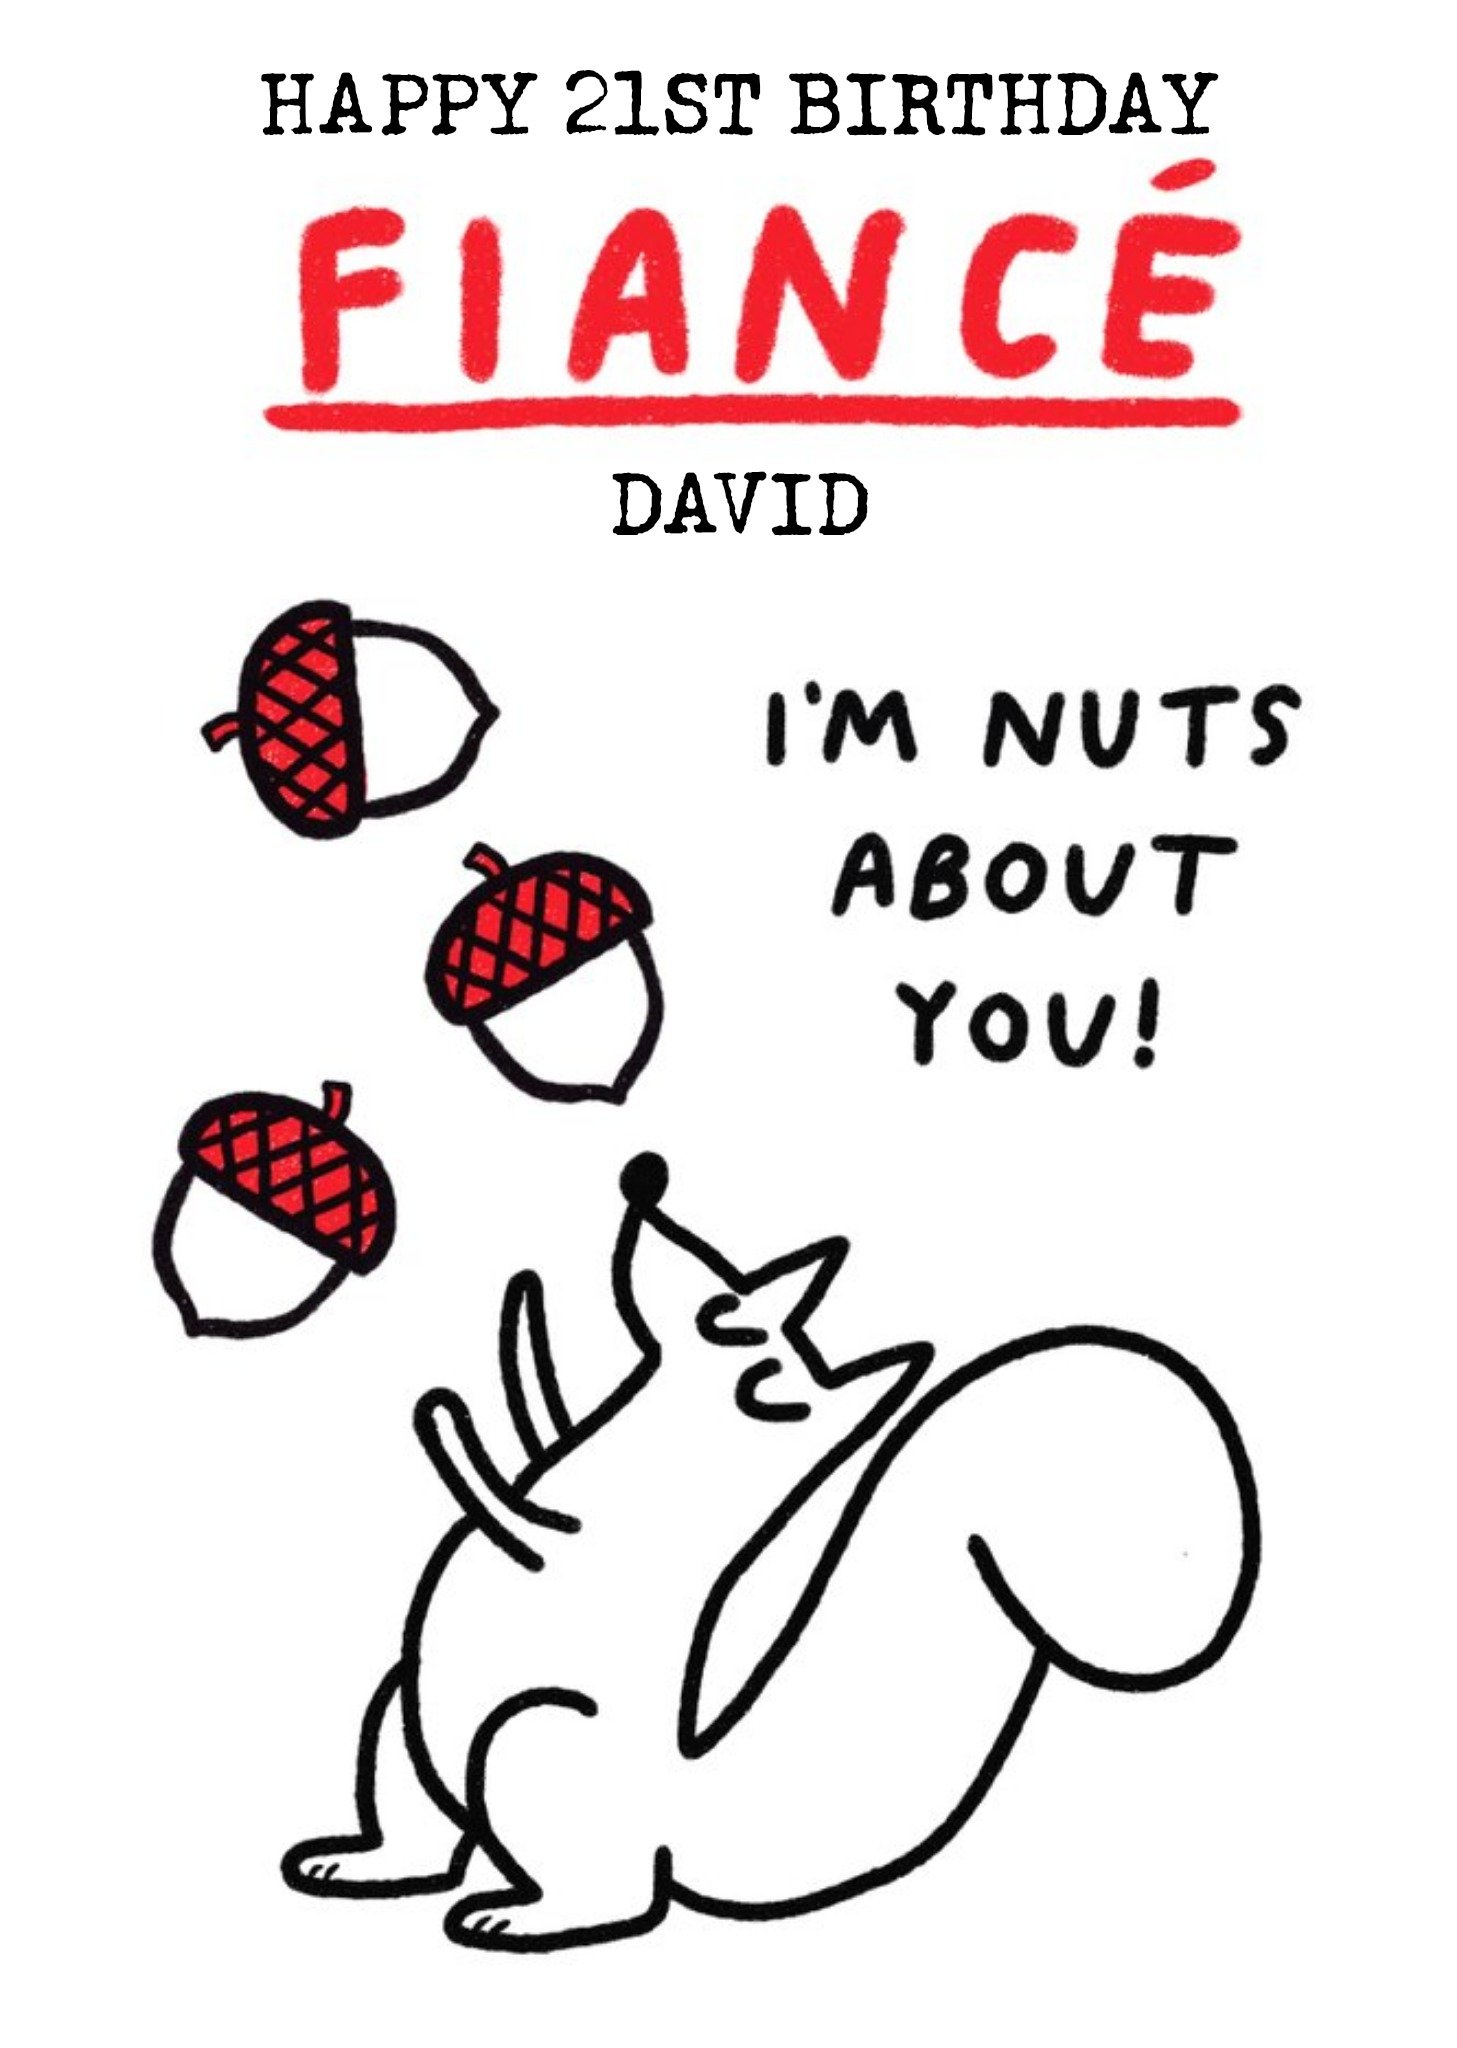 Moonpig Cartoon Illustration Of A Squirrel With Nuts Fiance's Twenty First Birthday Card Ecard